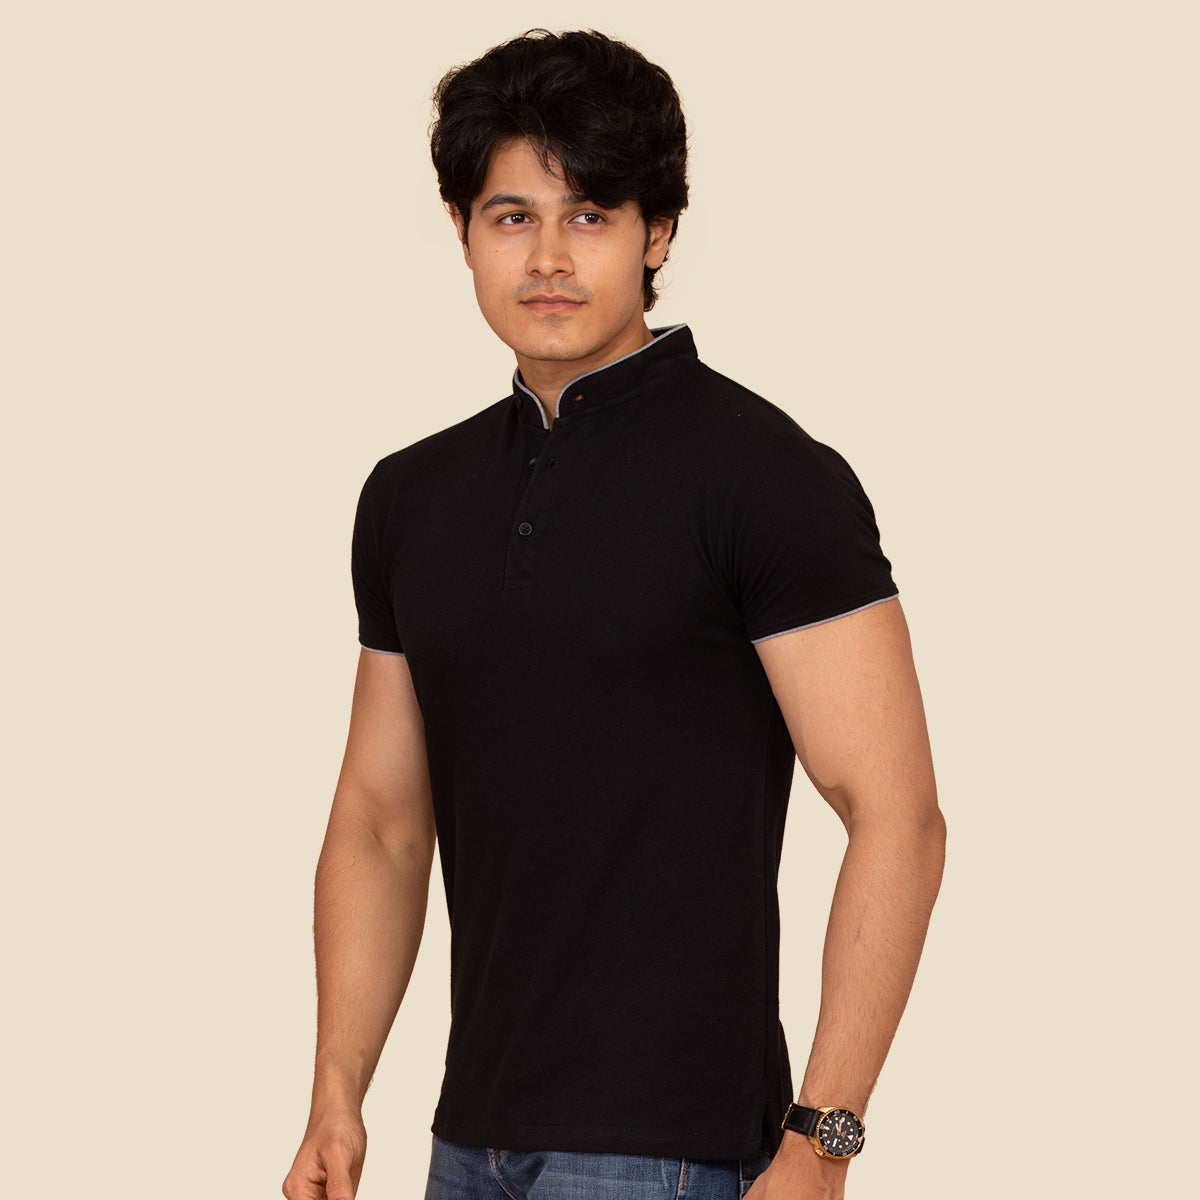 Prizmwear Pāla™️ Black Tshirt